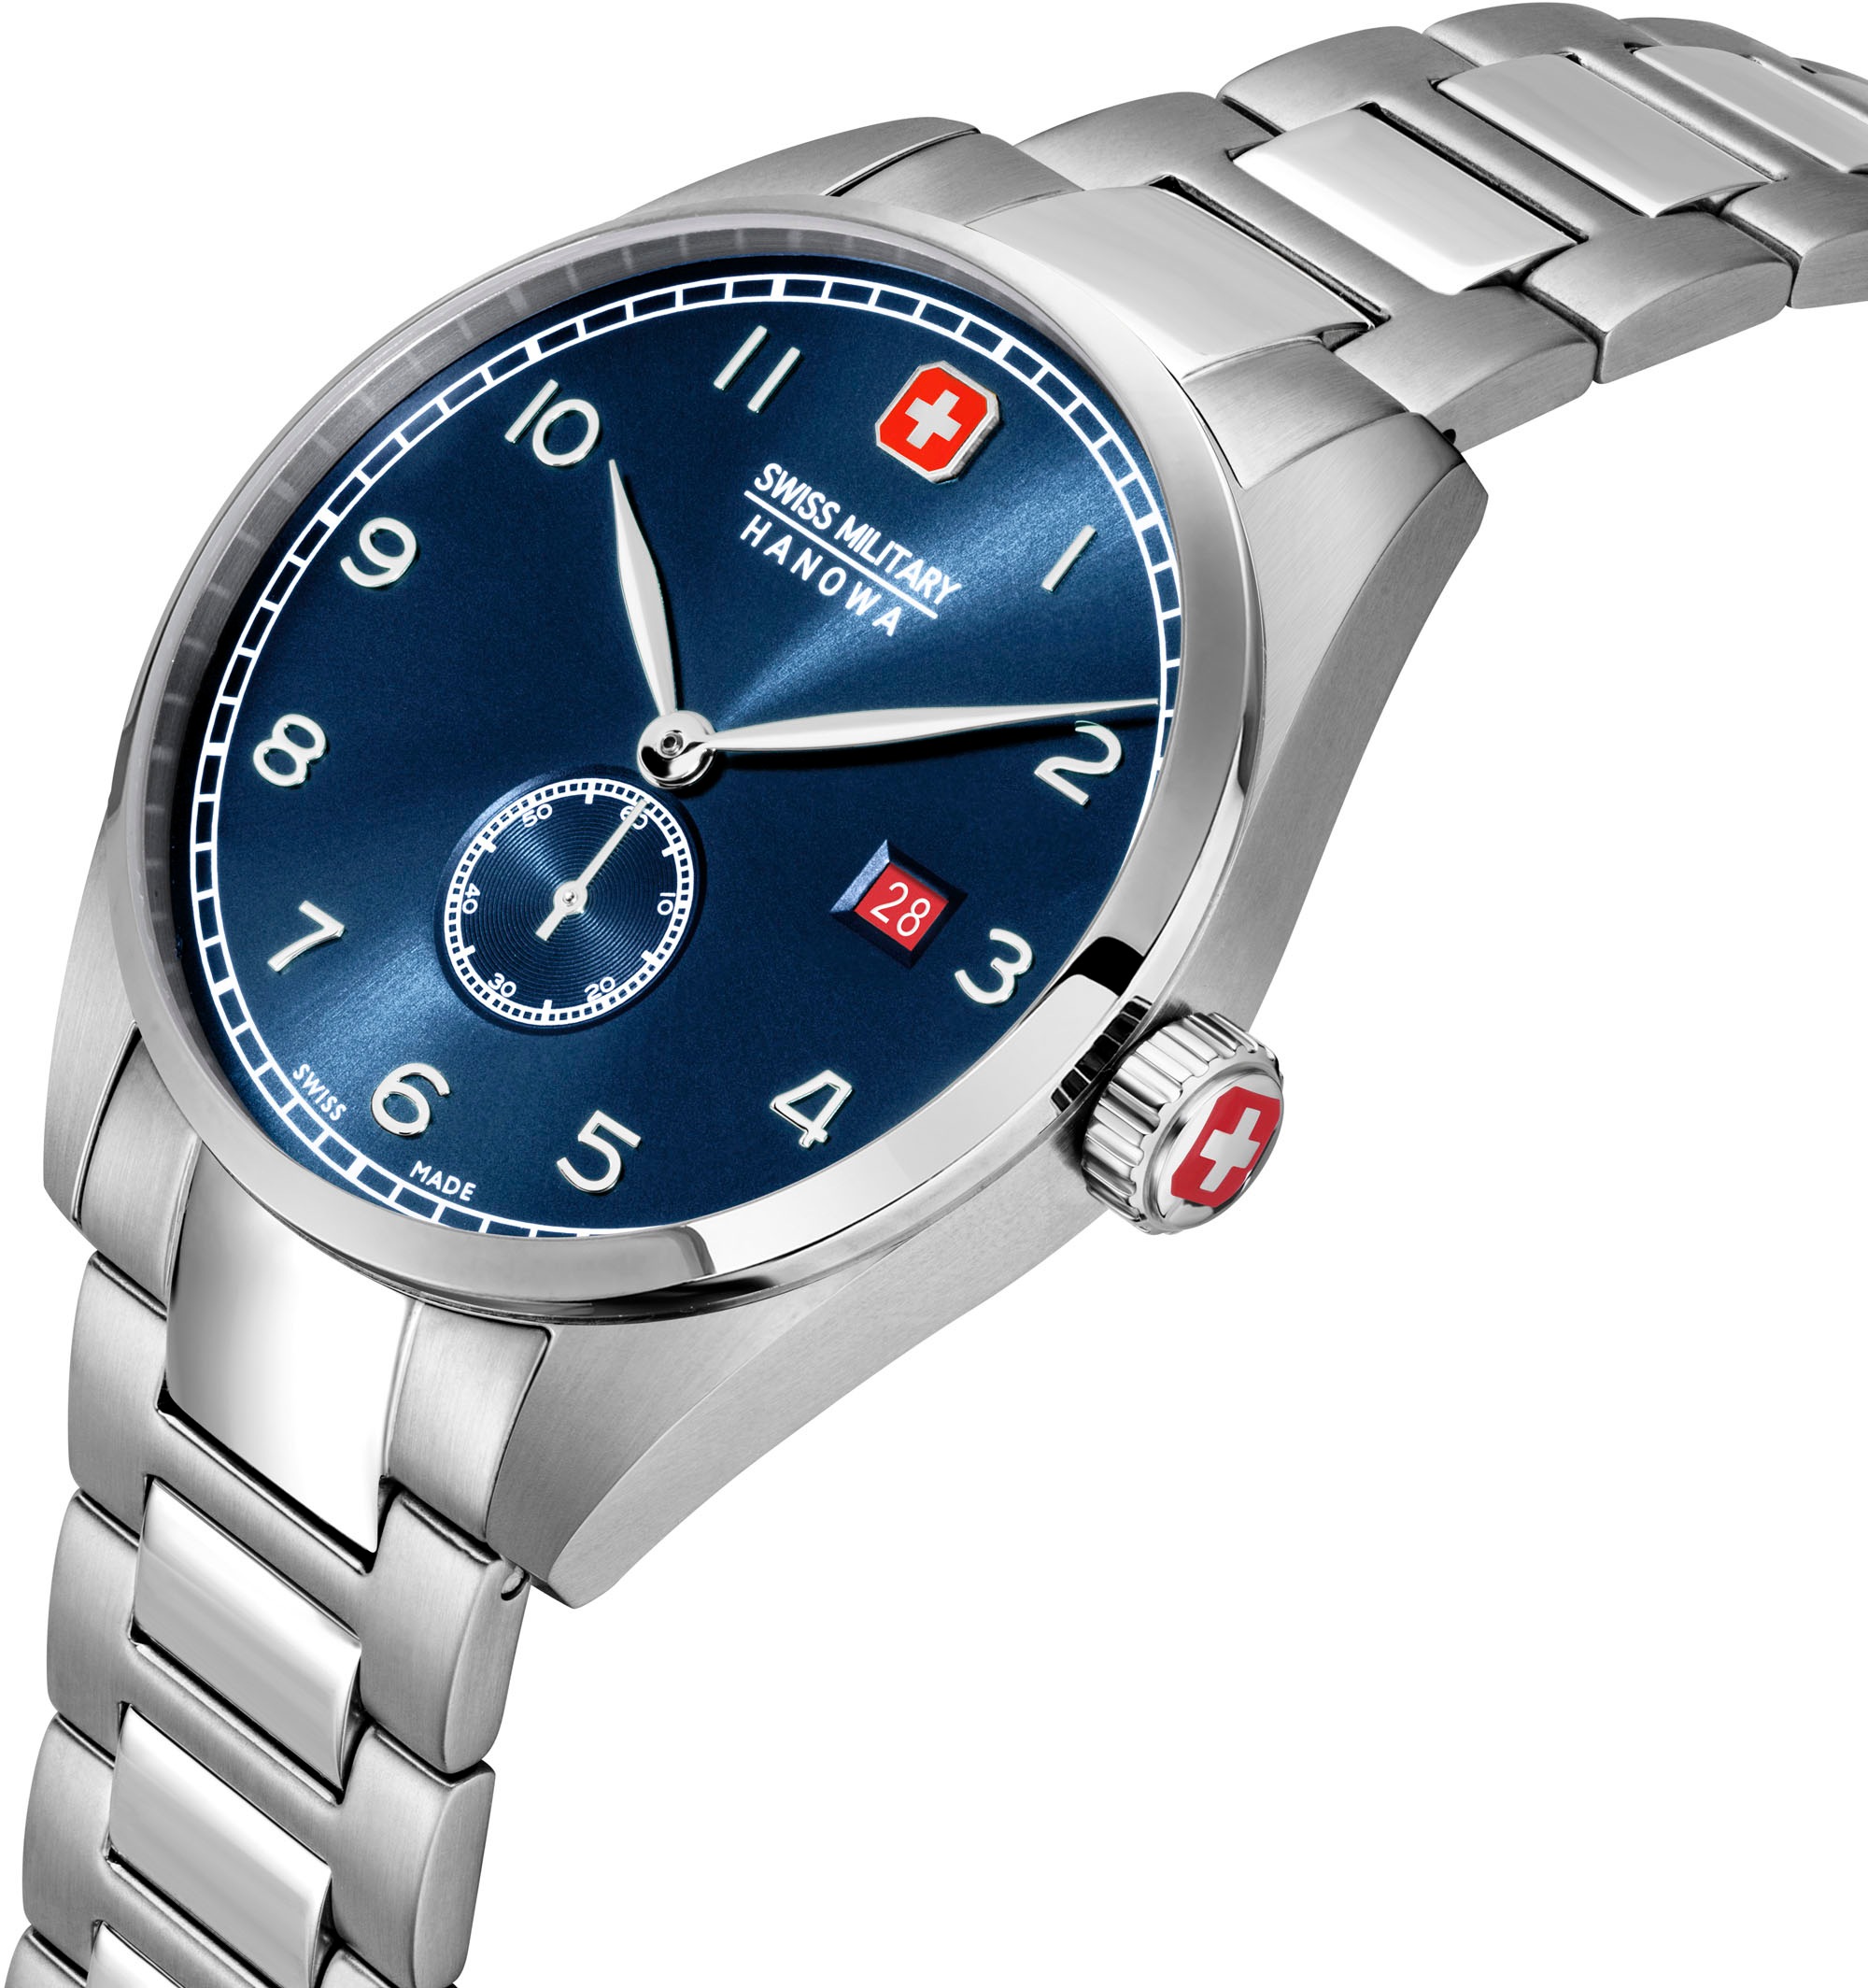 Swiss Military Hanowa Schweizer Uhr »LYNX, SMWGH0000705«, Quarzuhr, Armbanduhr, Herrenuhr, Swiss Made, Datum, Saphirglas, analog